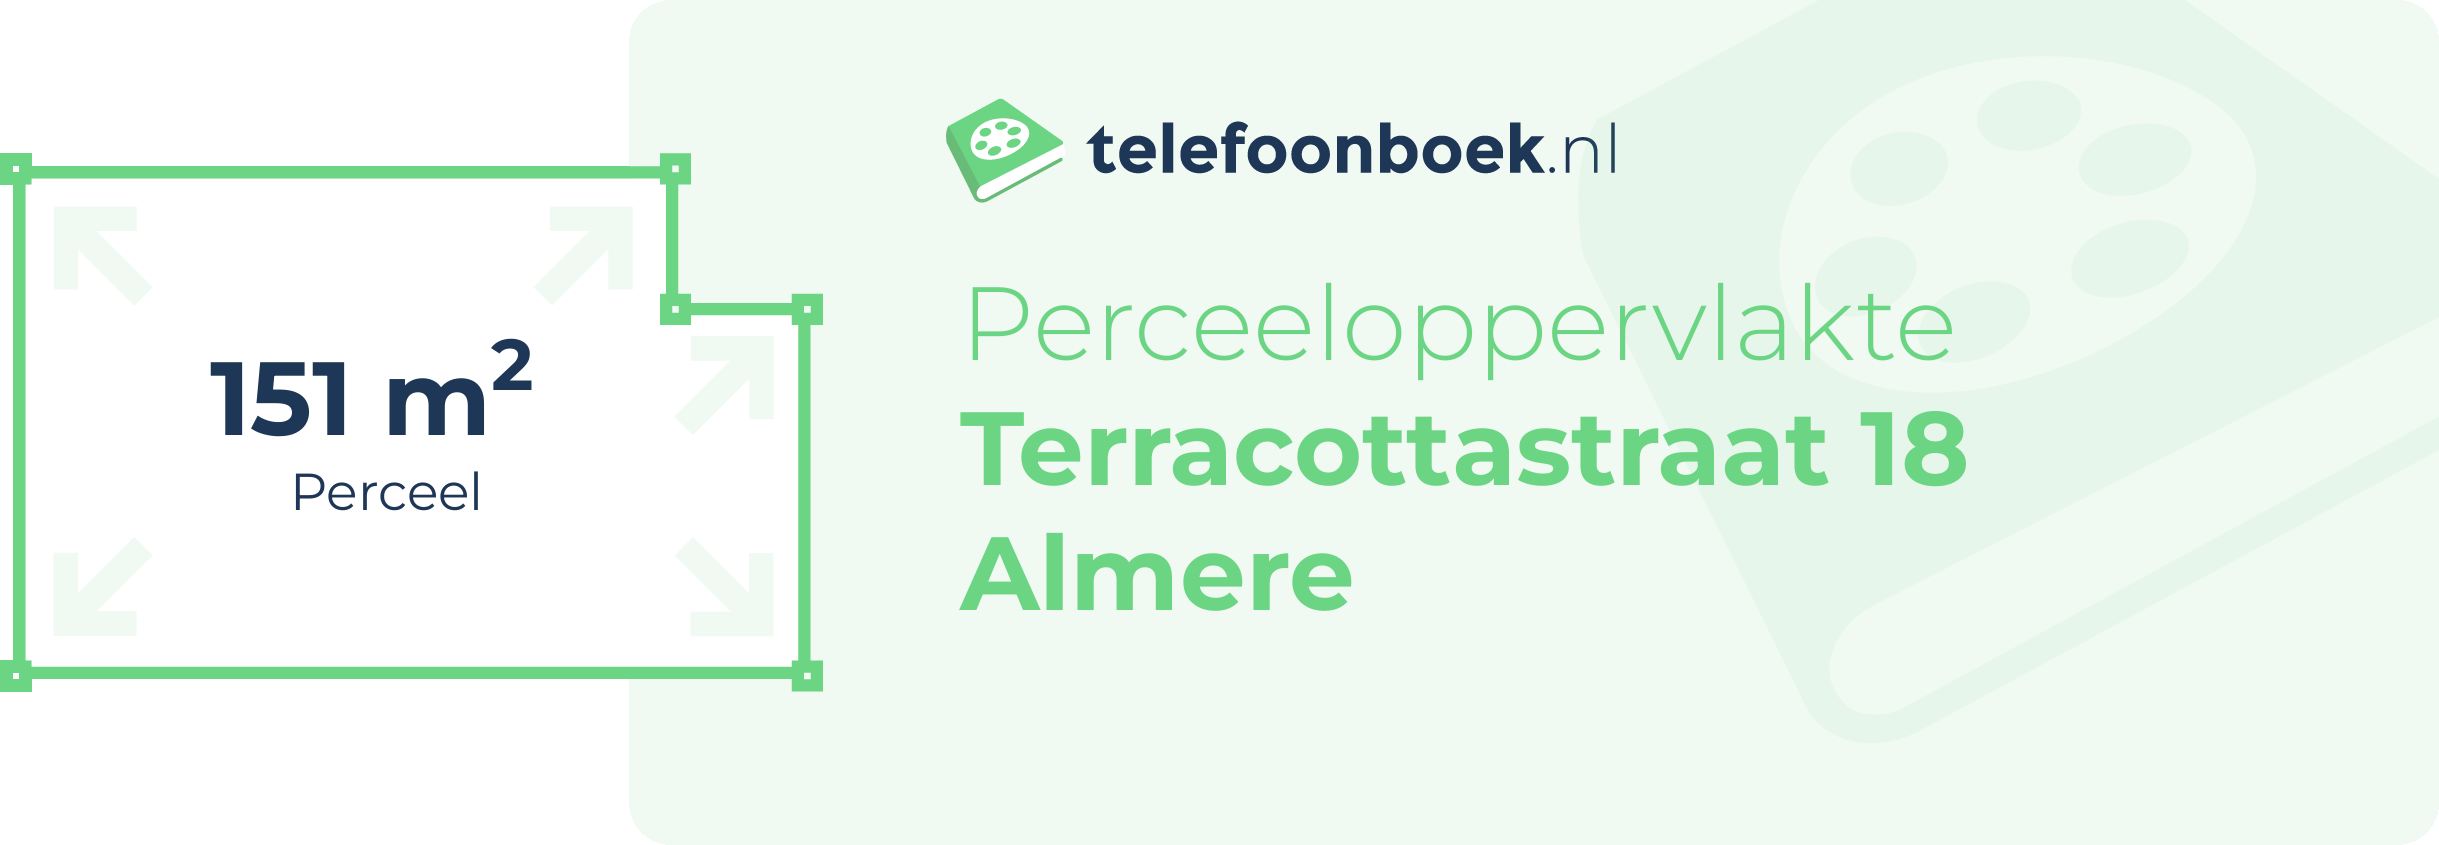 Perceeloppervlakte Terracottastraat 18 Almere